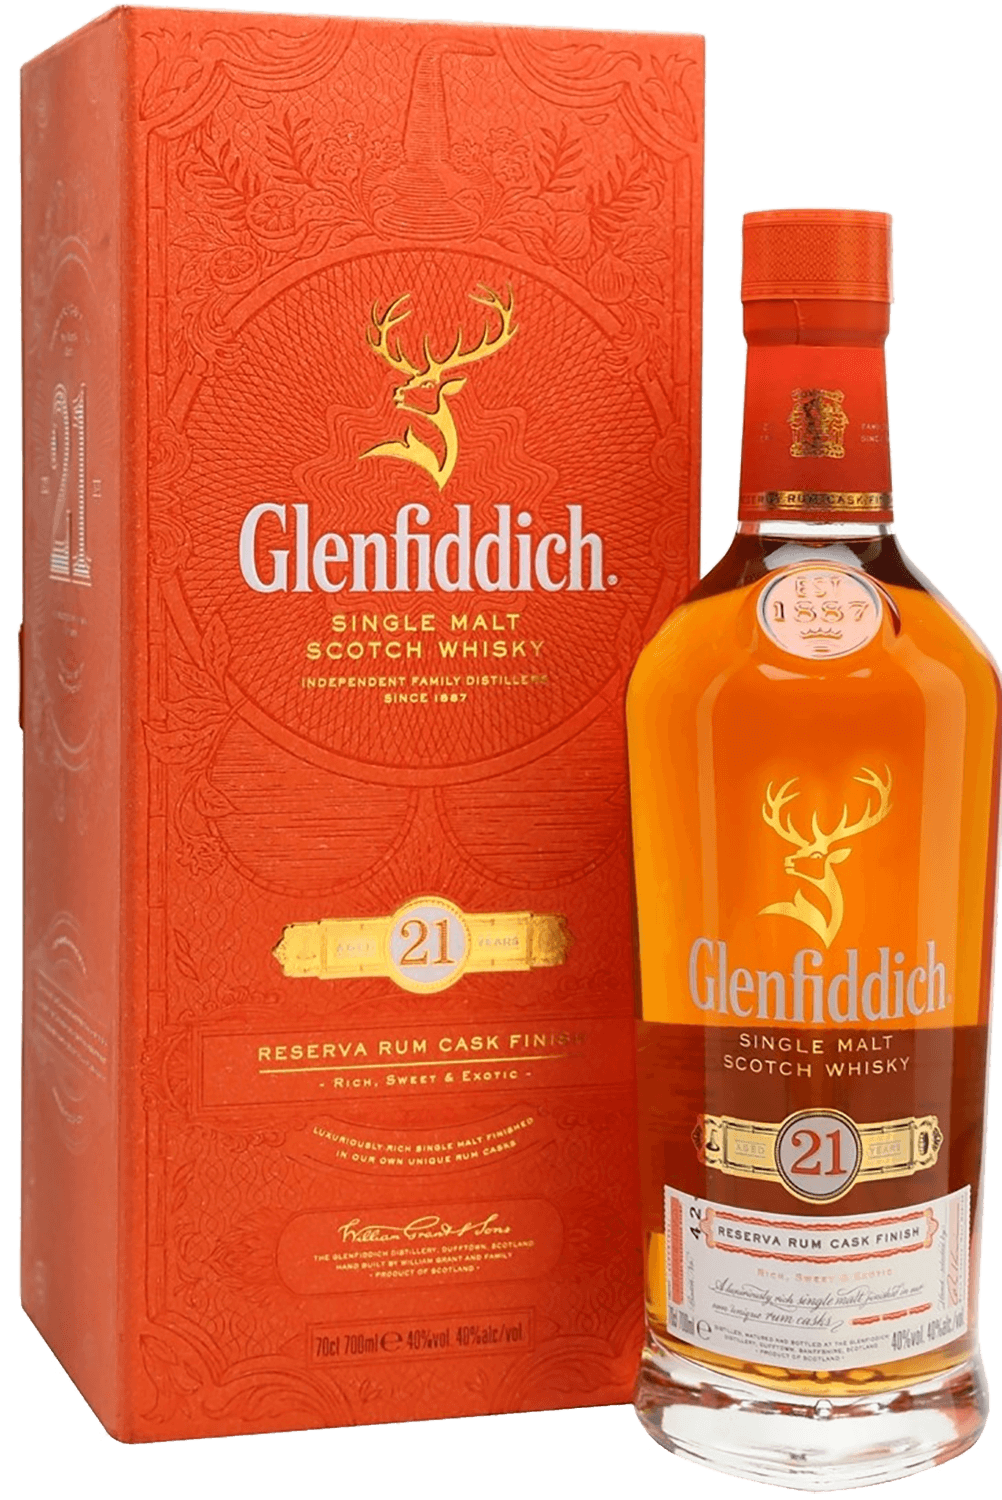 Glenfiddich Single Malt Scotch Whisky 21 yo (gift box) glenfiddich single malt scotch whisky 15 yo gift box